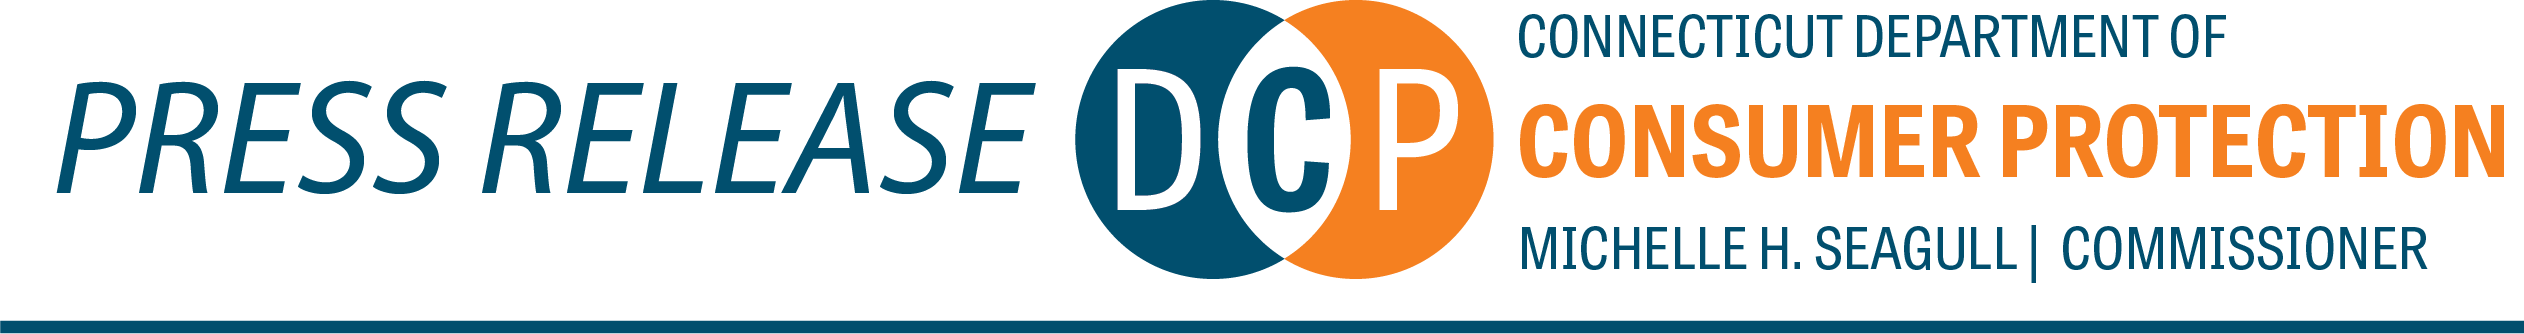 DCP Press Release Header